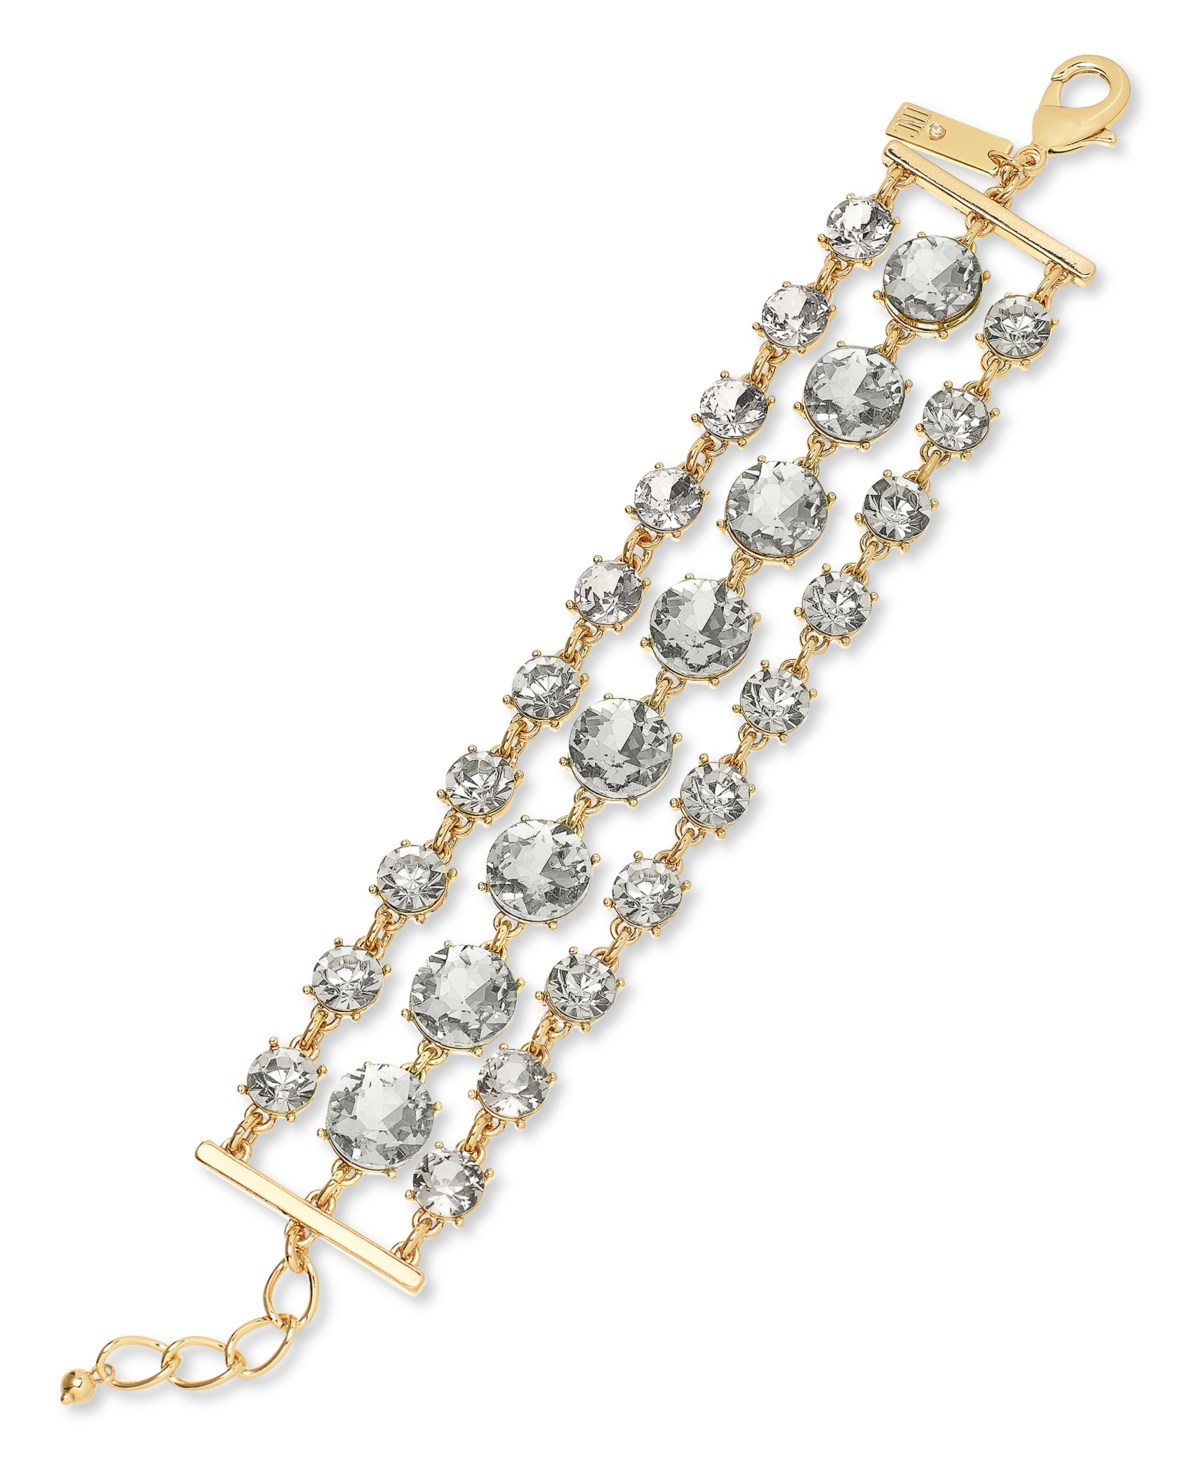 Silver-Tone Color Stone Triple Row Flex Bracelet, Created for Macy's - Gold